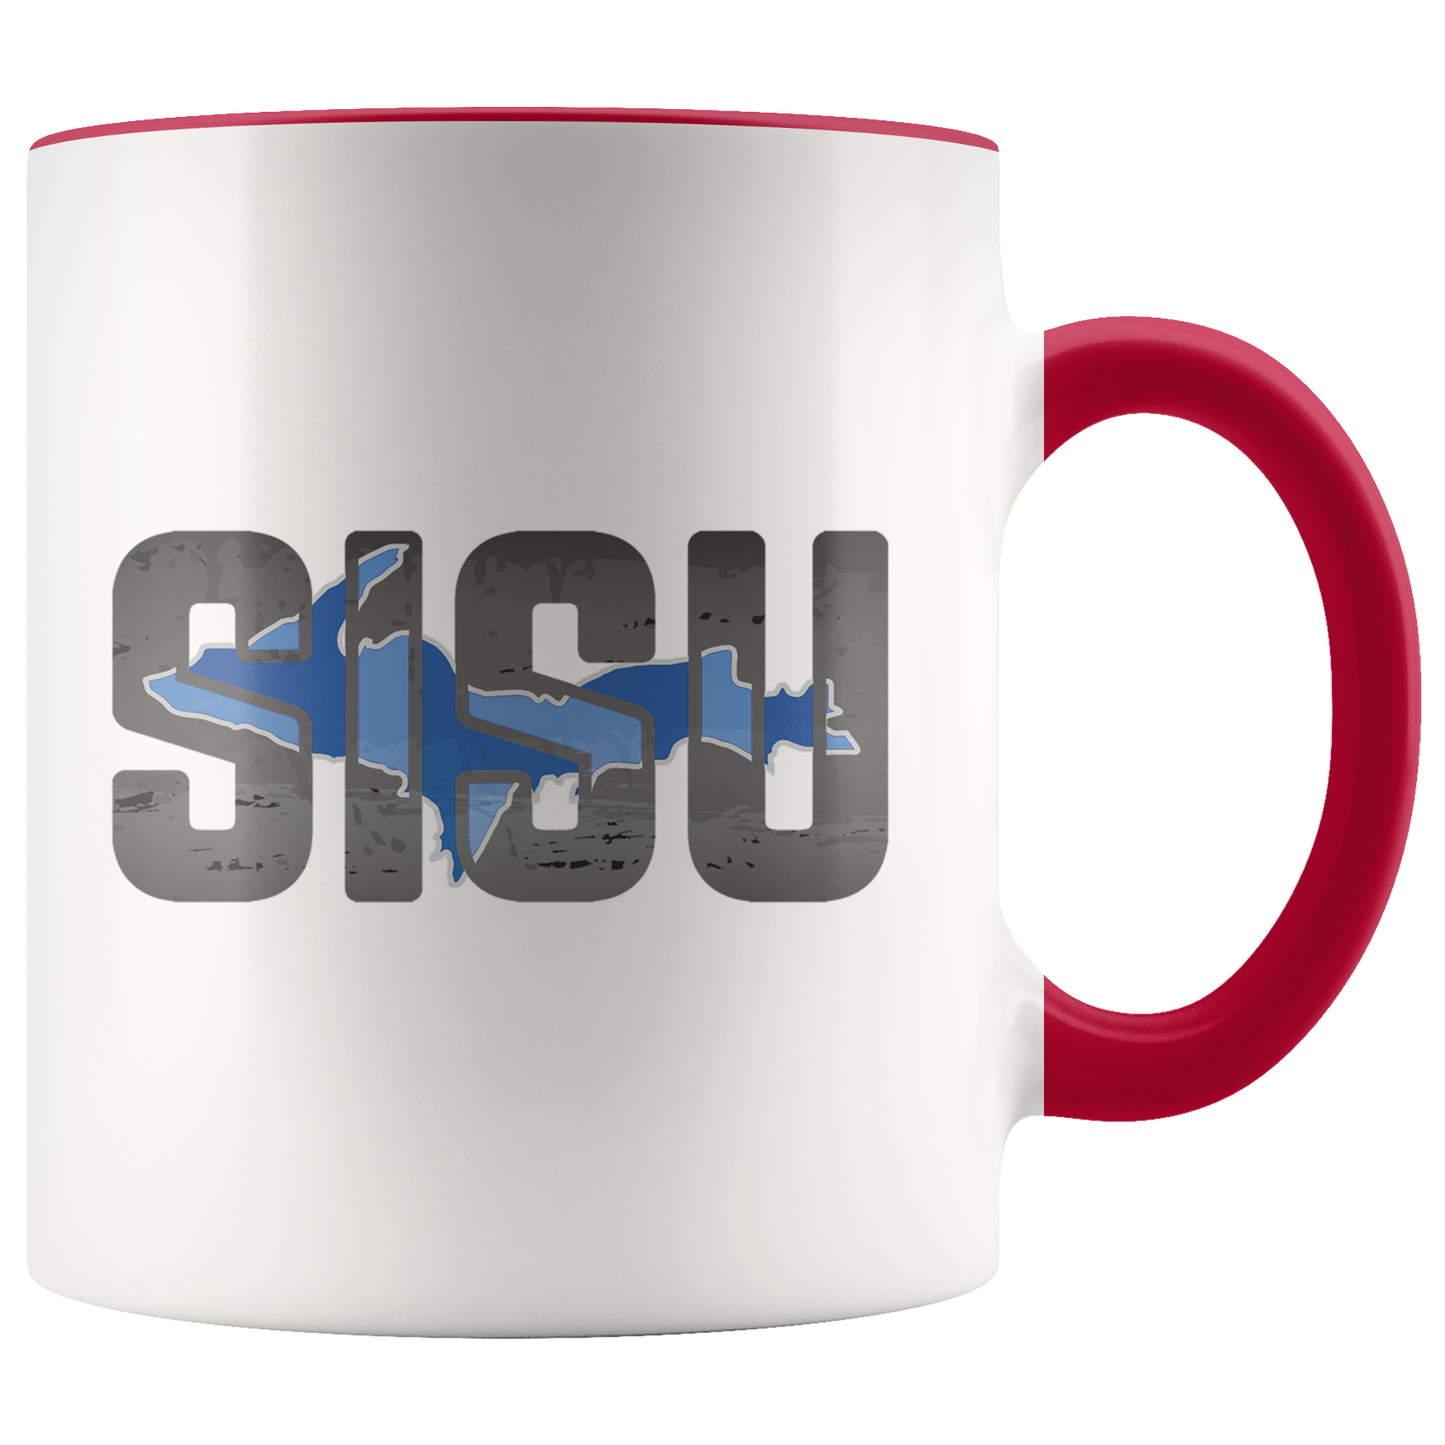 Finnish SISU Mug | Upper Michigan Coffee Cup